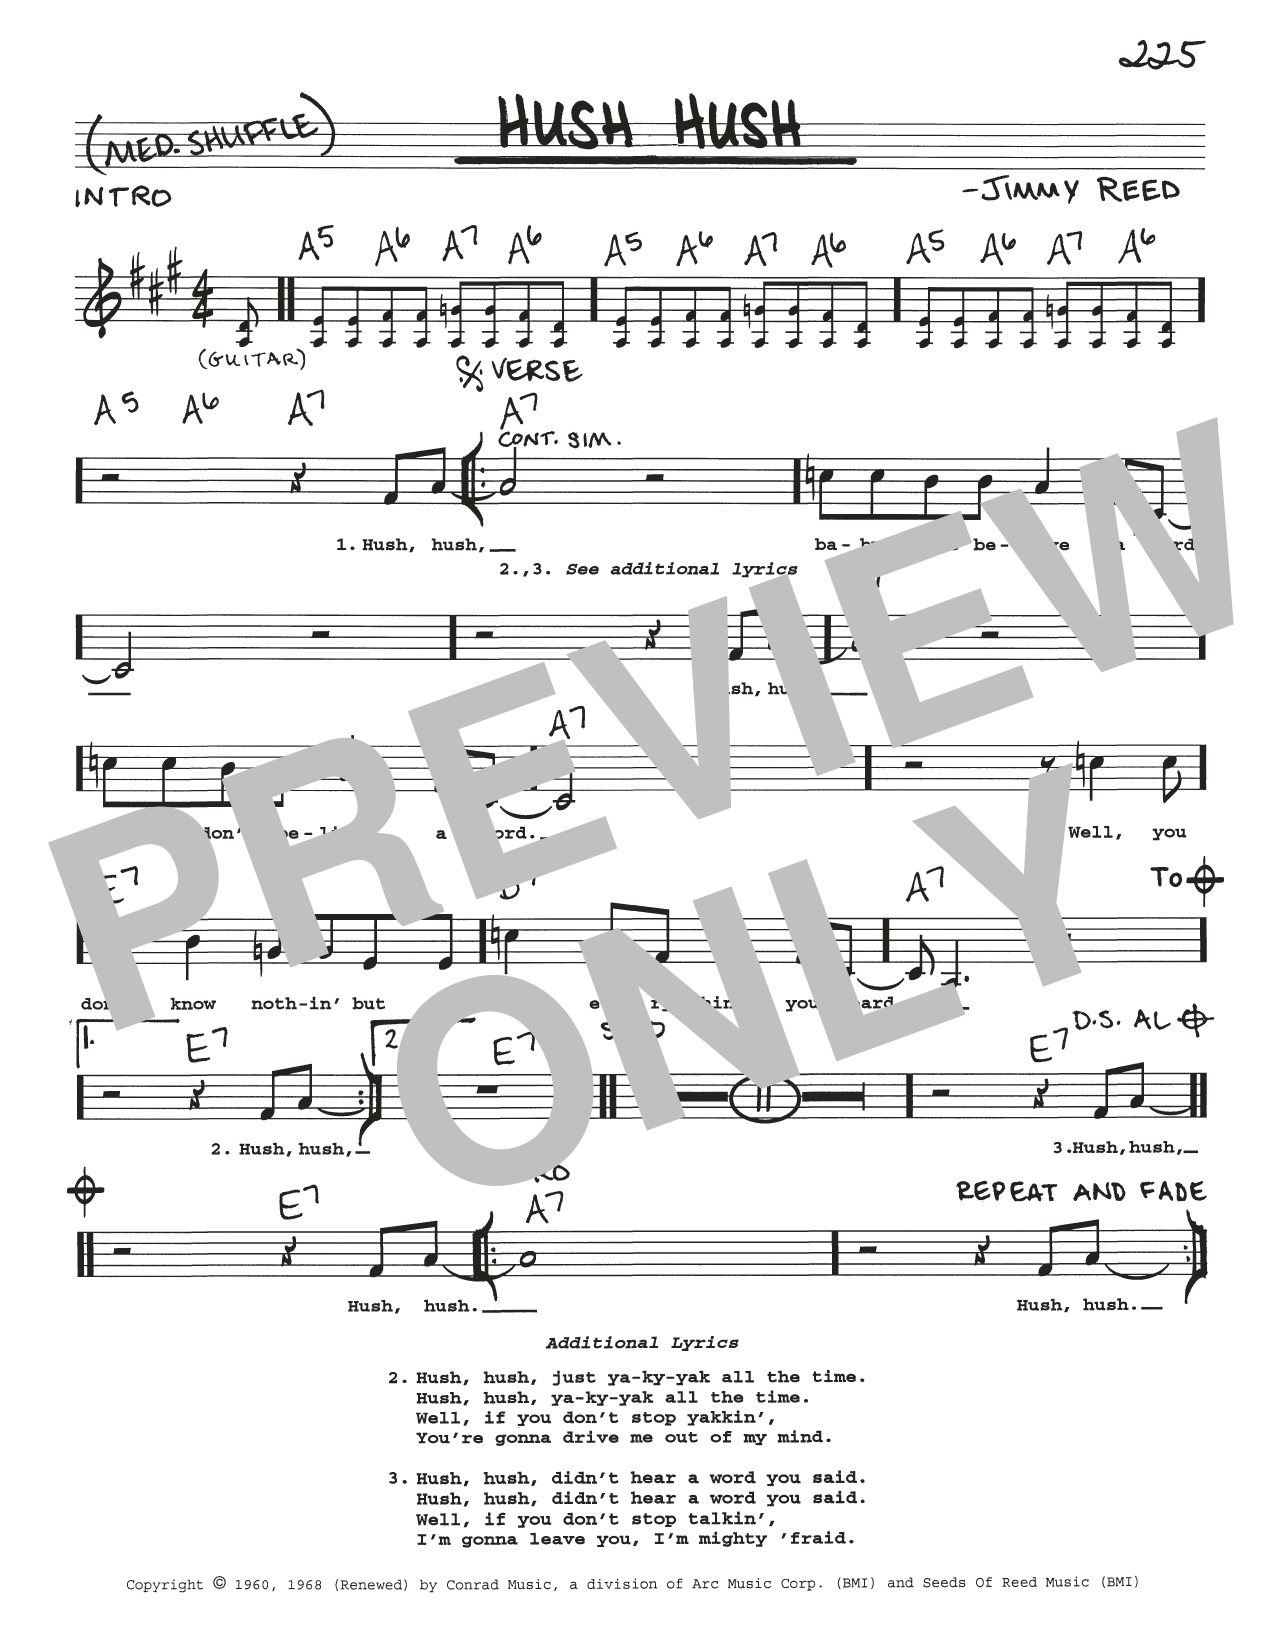 Jimmy Reed Hush Hush Sheet Music Notes & Chords for Real Book – Melody, Lyrics & Chords - Download or Print PDF